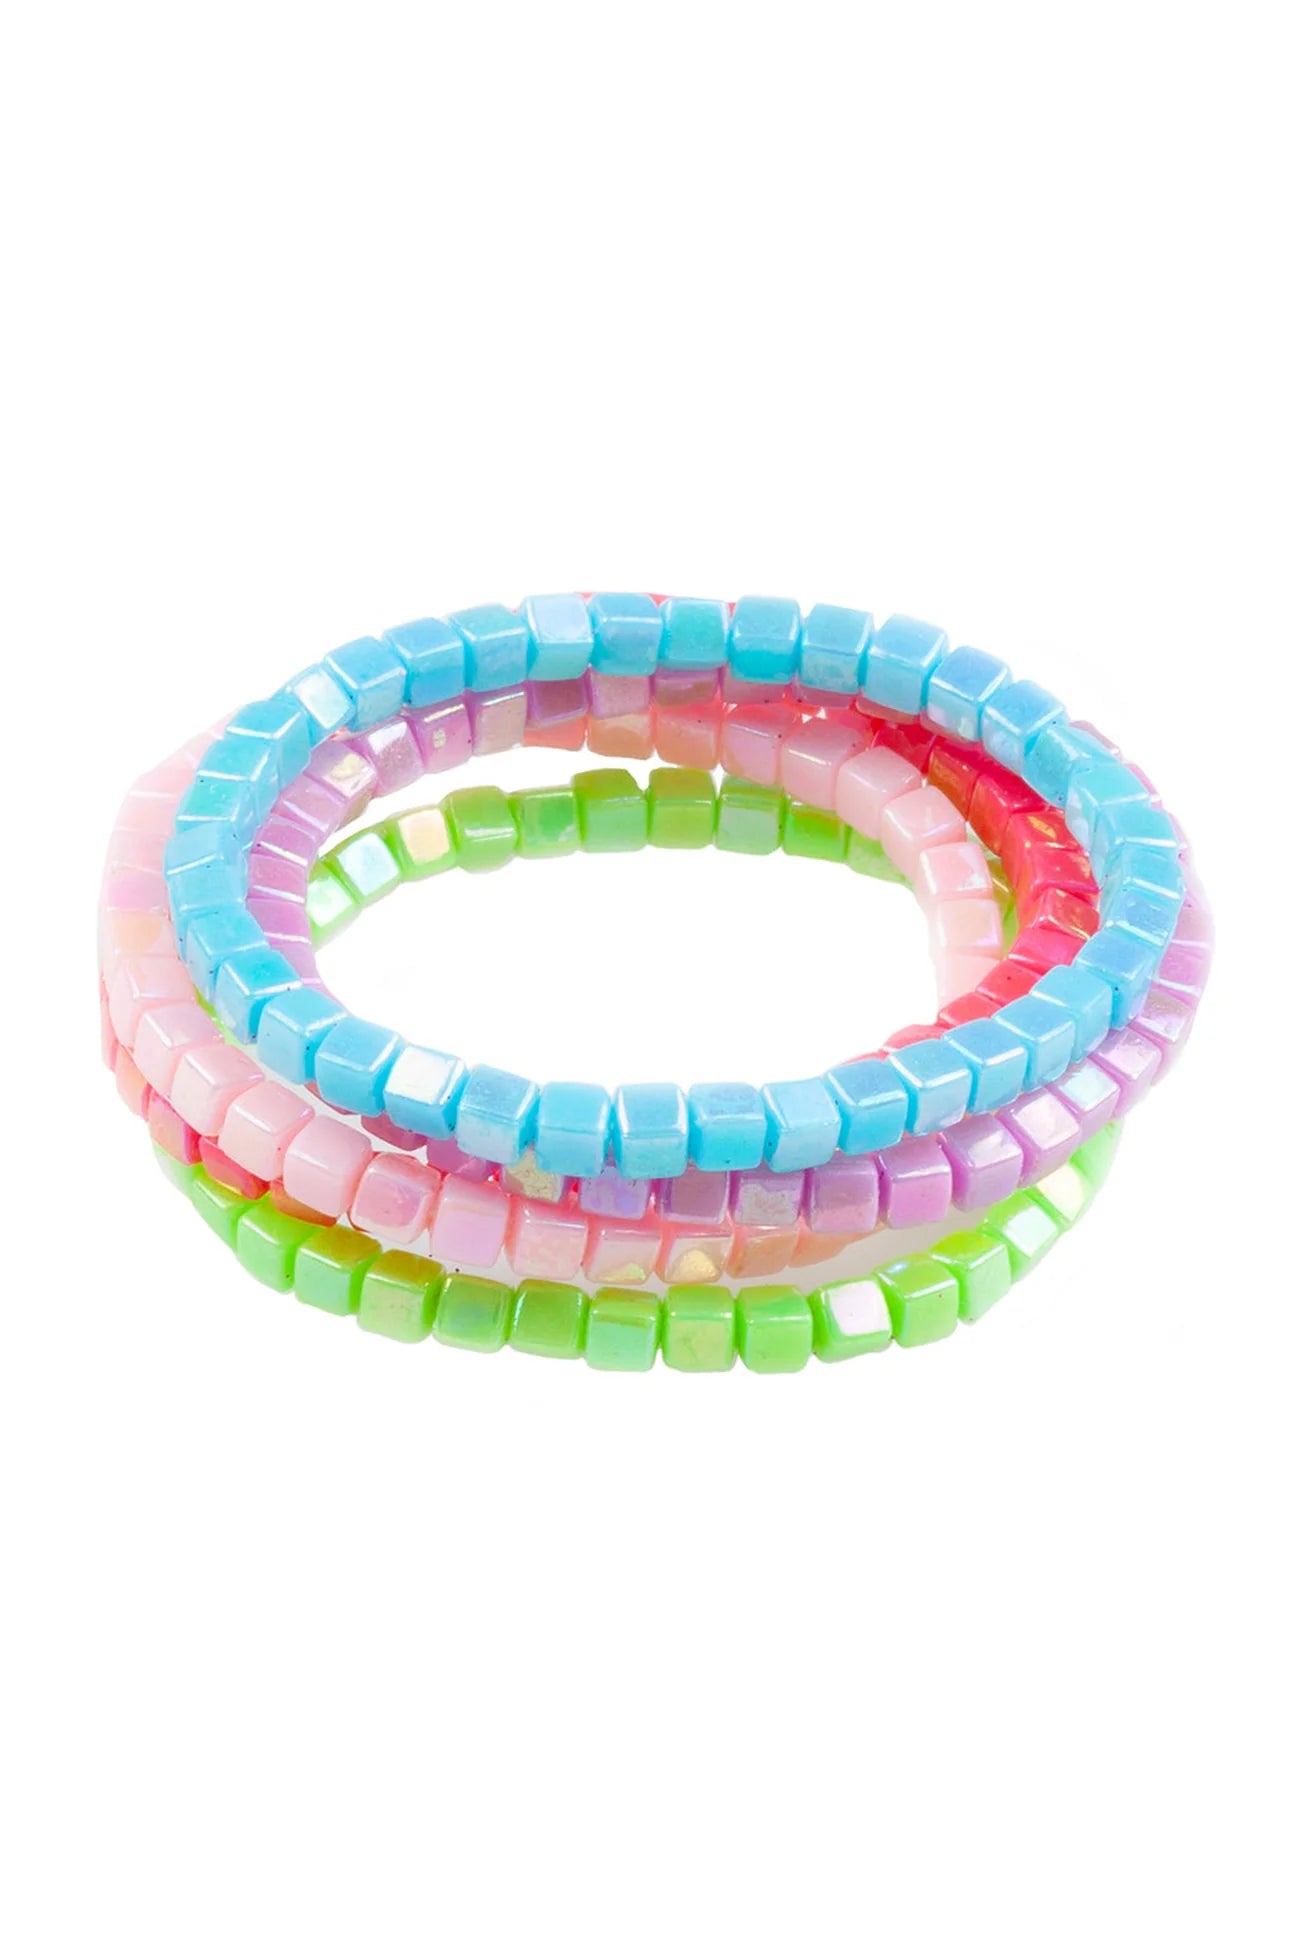 Tints Tones Rainbow Bracelet Set by Great Pretenders # 84008